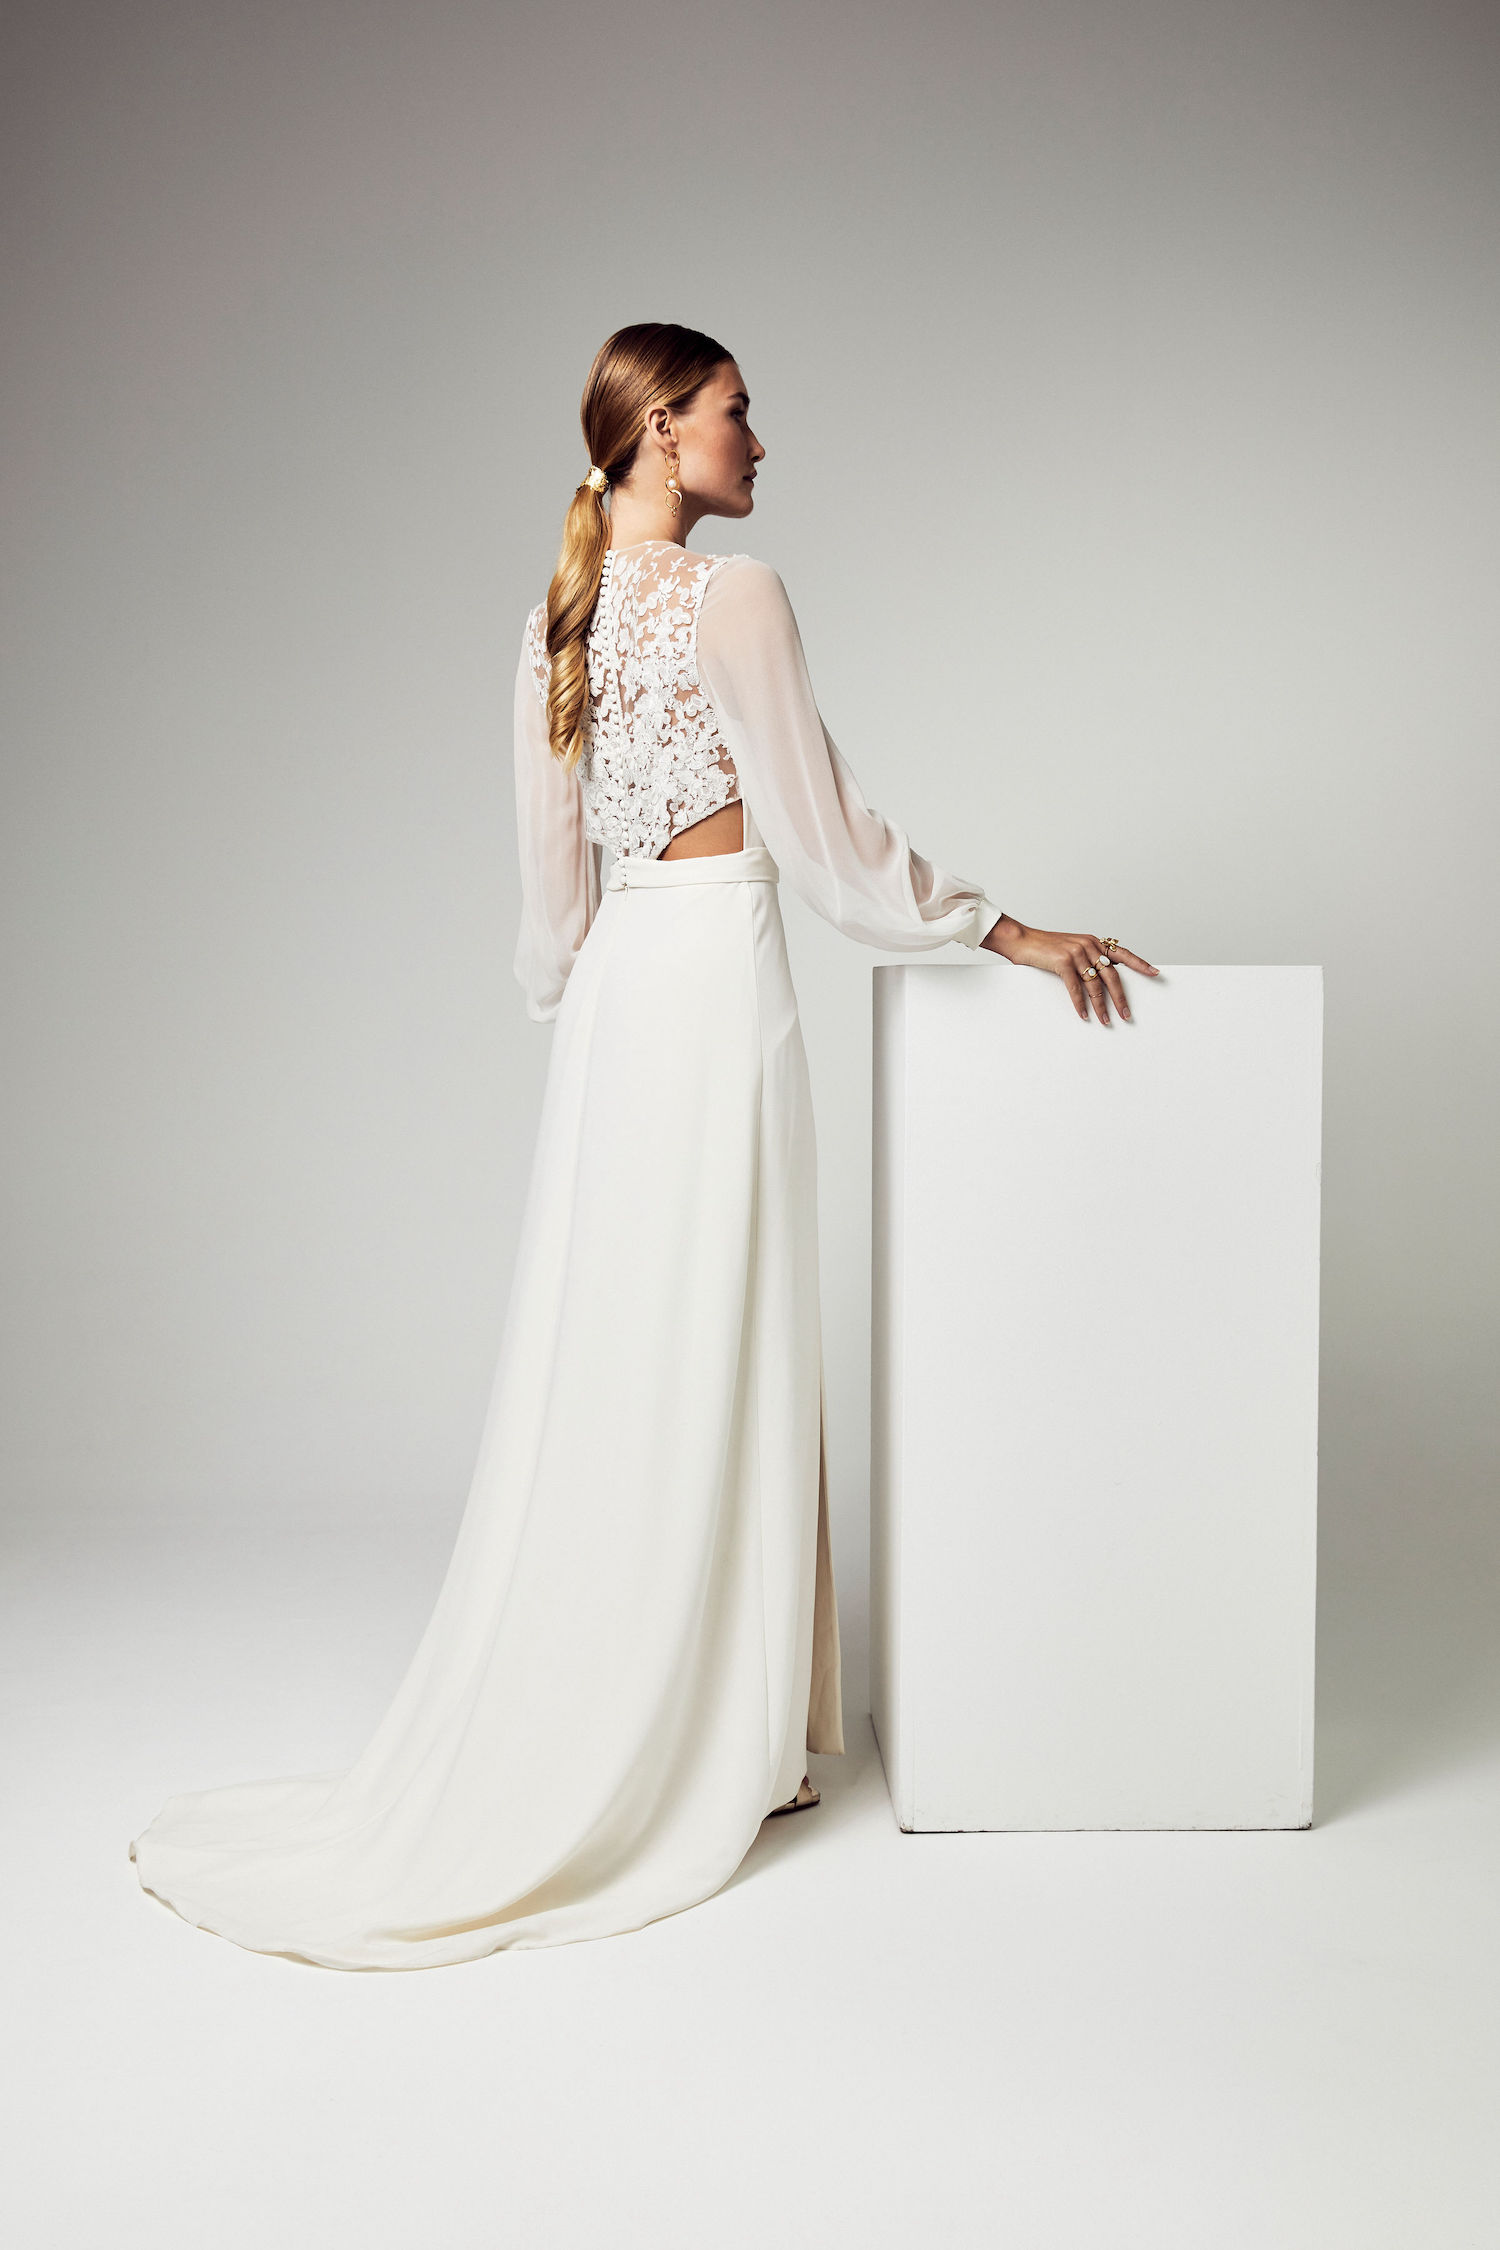 Elise Martimort Collection 2022 - Robes de Mariée - Blog Mariage Madame C